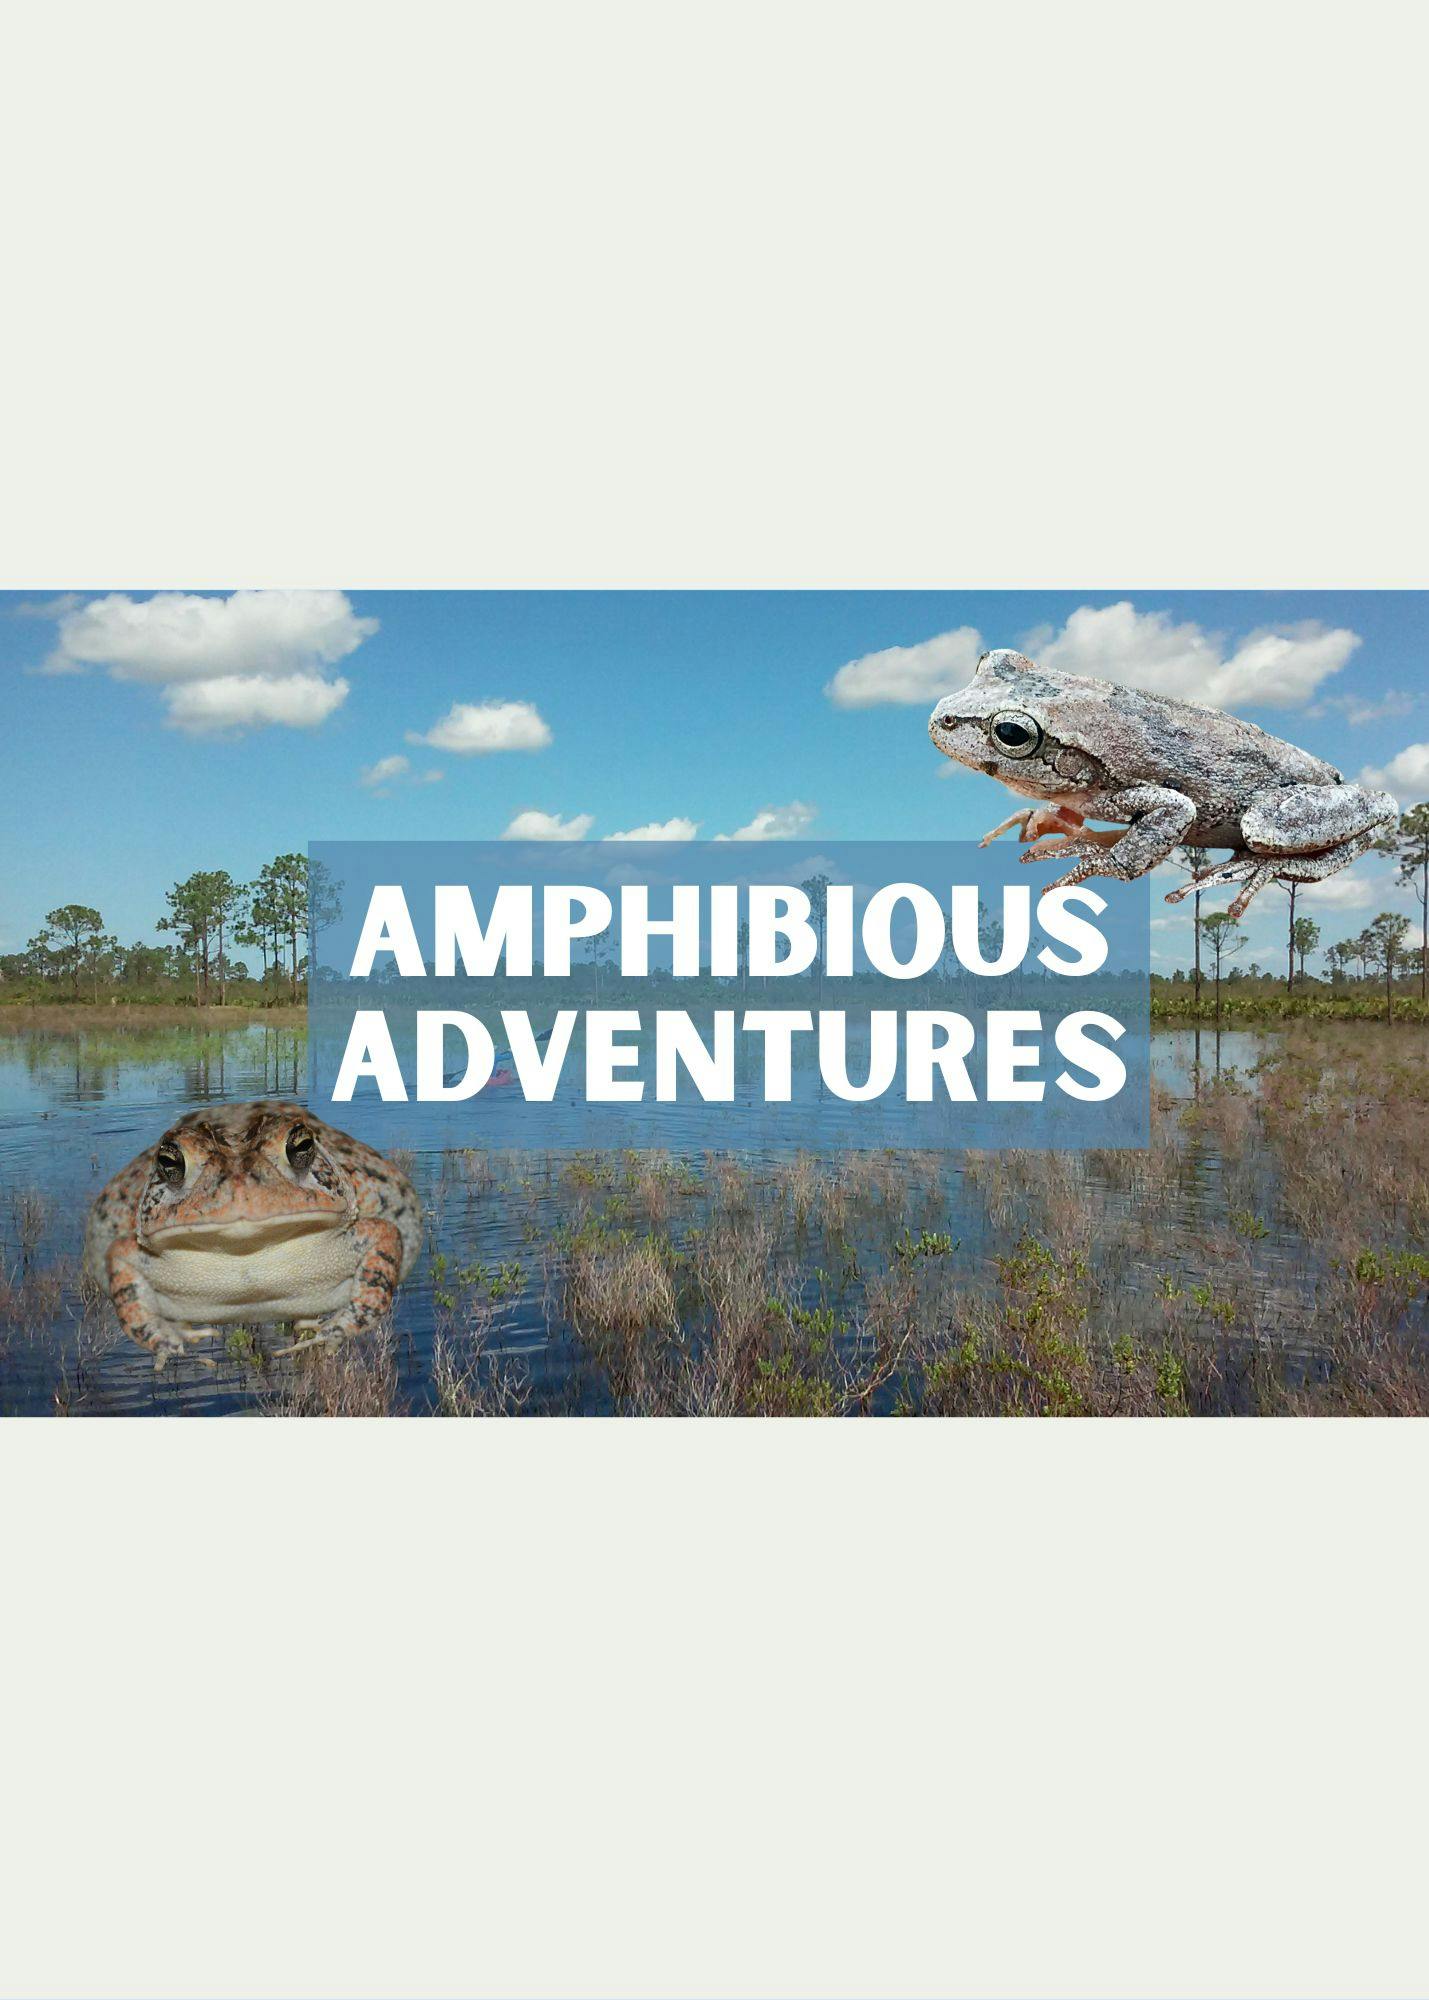 Amphibious Adventure